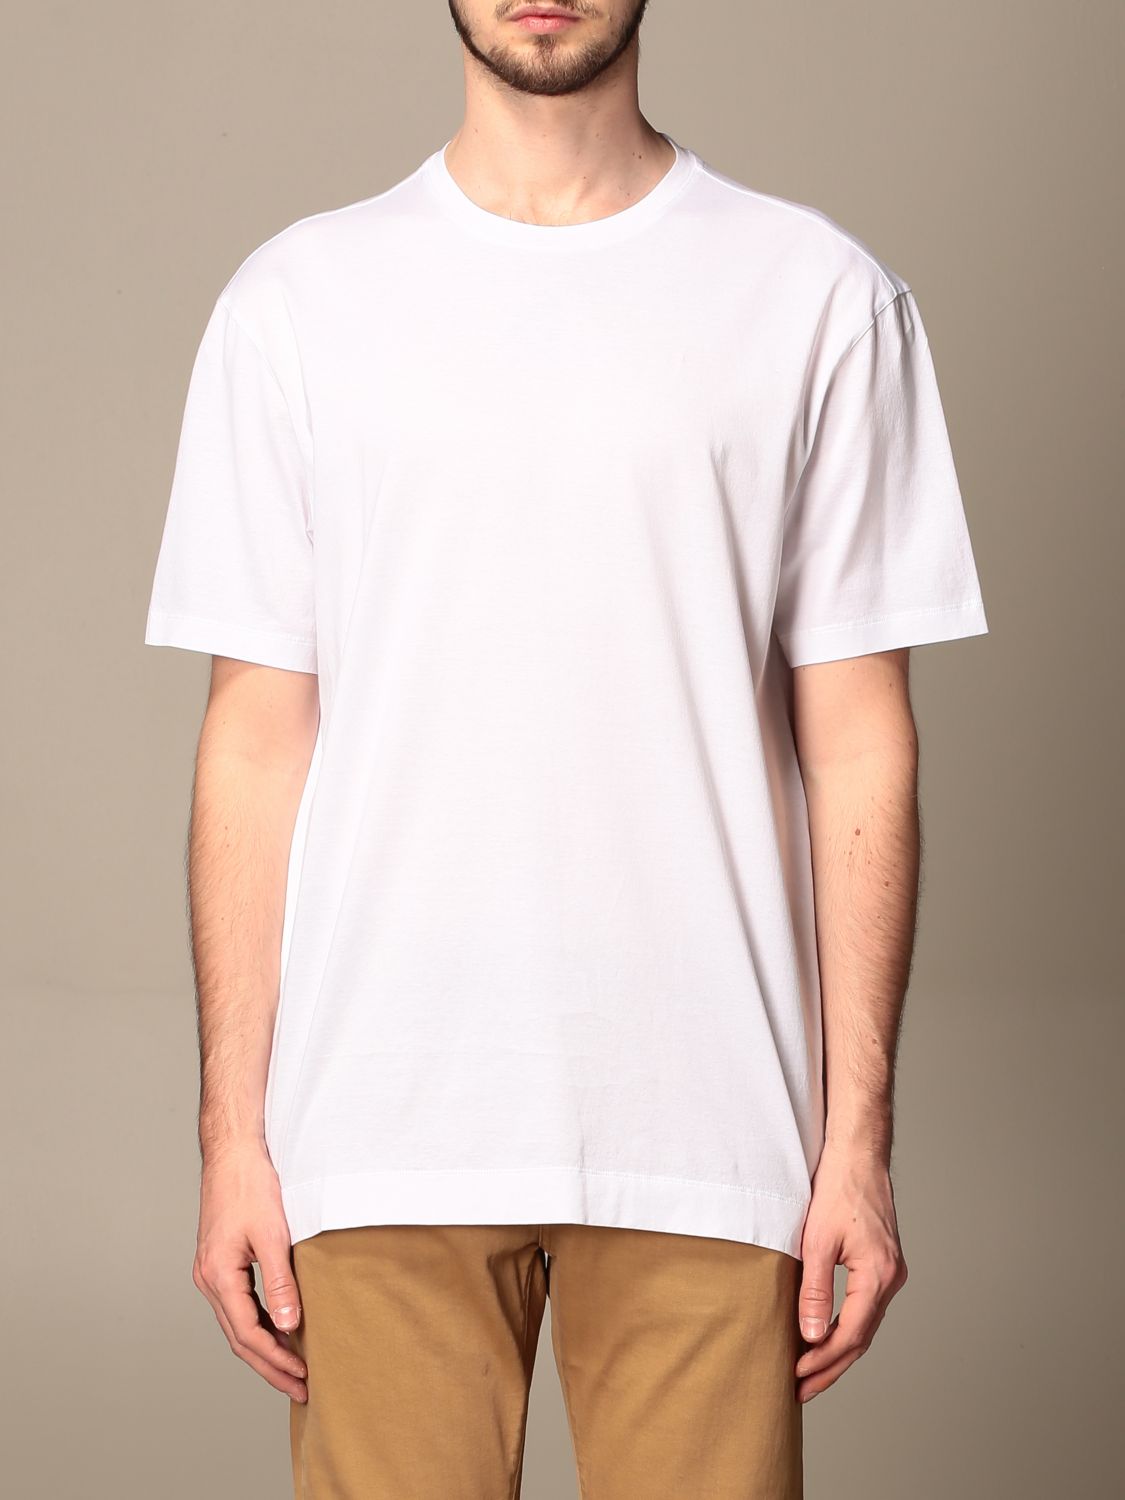 Z ZEGNA: basic short-sleeved T-shirt - White | Z ZEGNA t-shirt VV372 ...